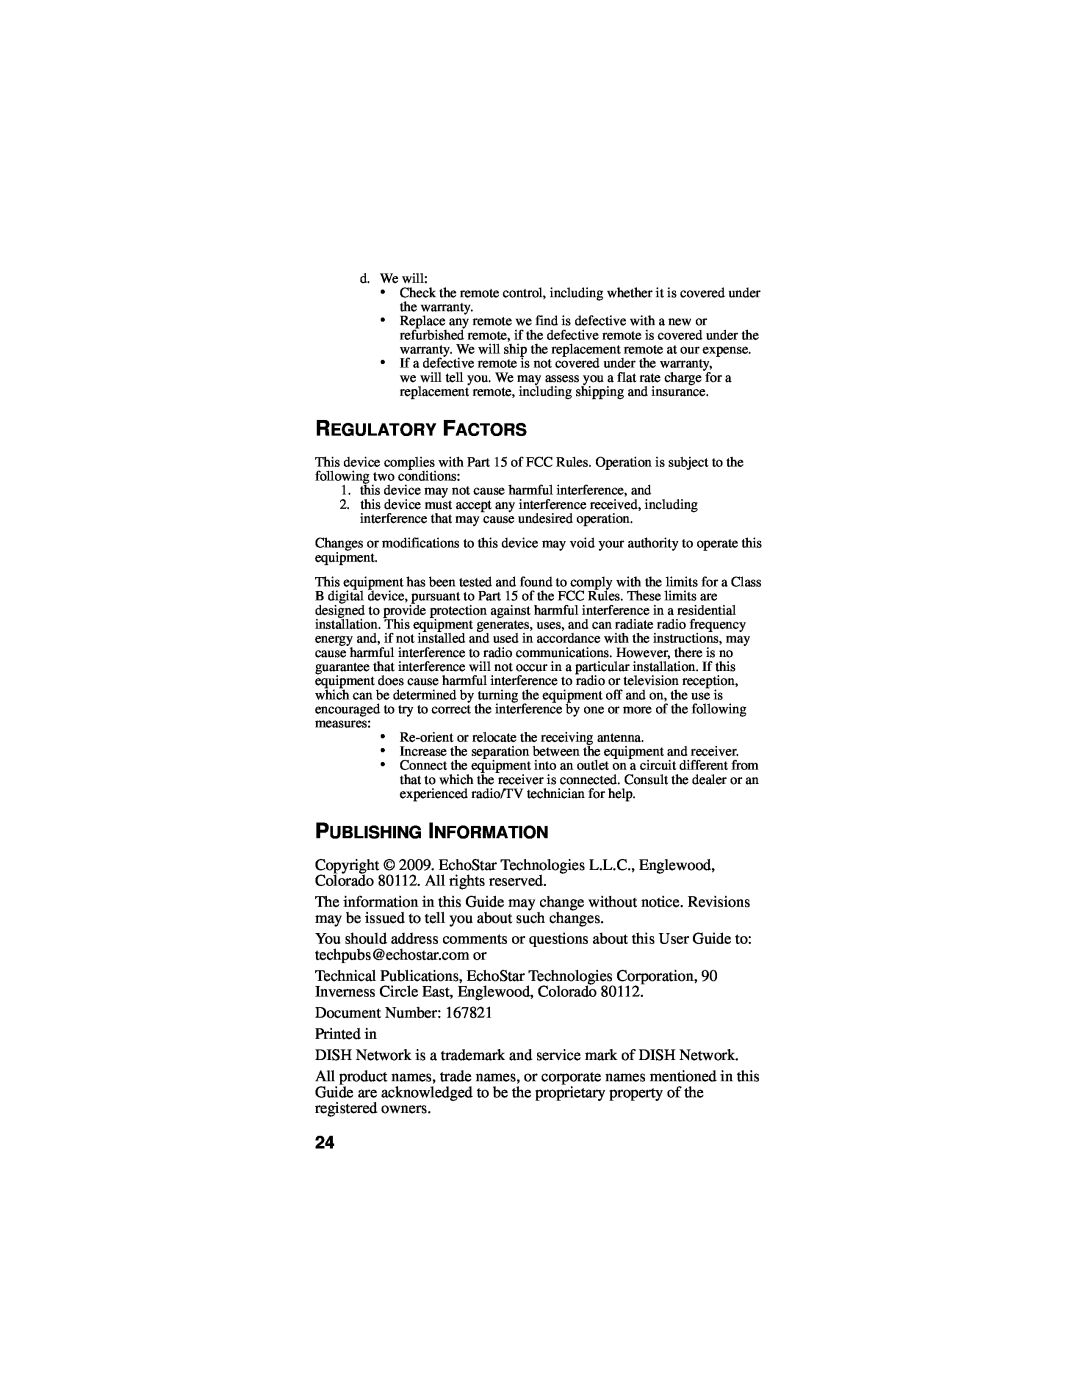 Univex 5.4 manual Regulatory Factors, Publishing Information 